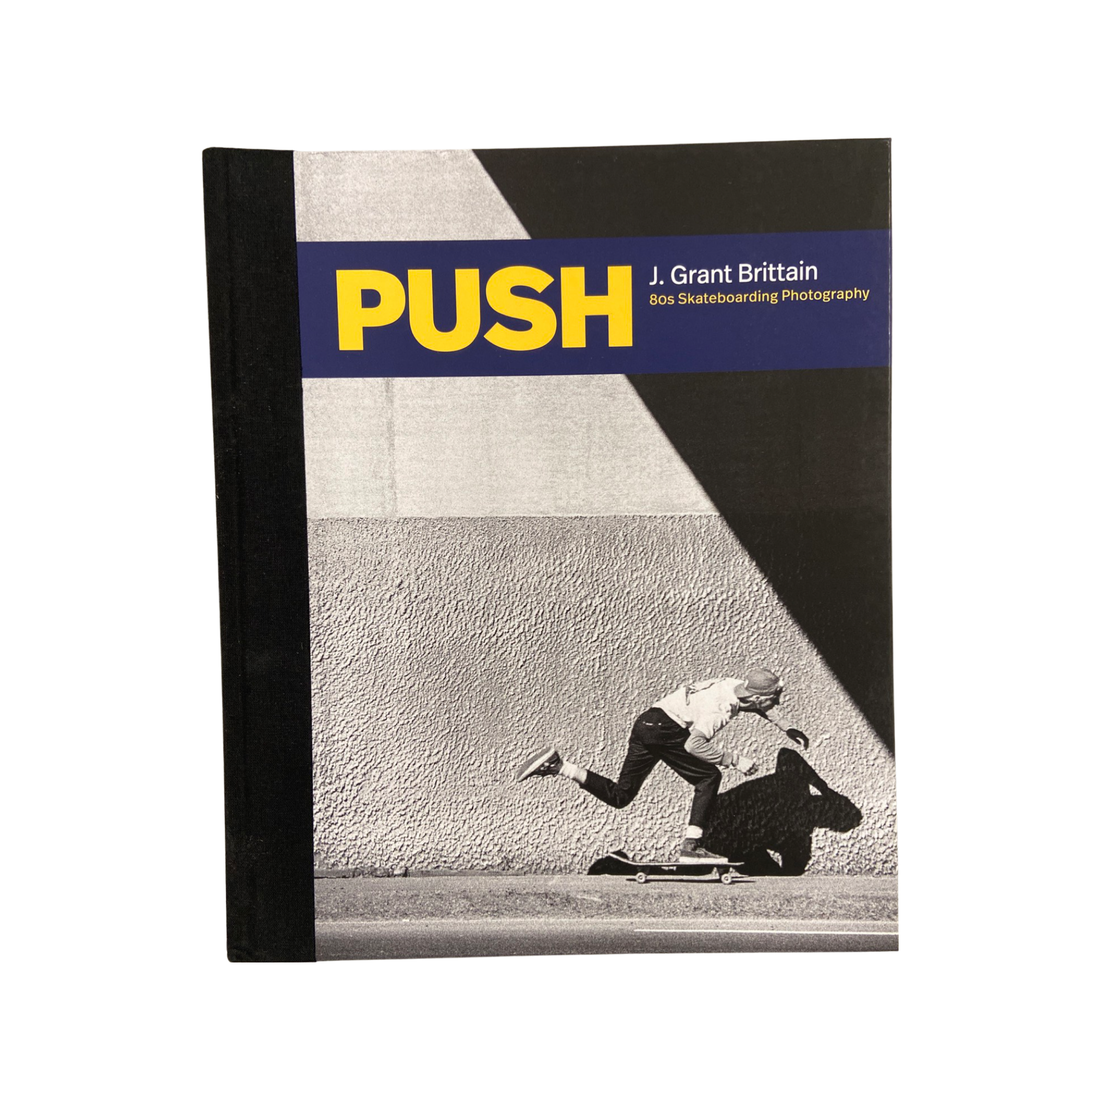 PUSH - 80s Skateboard Photography - J. Grant Brittain